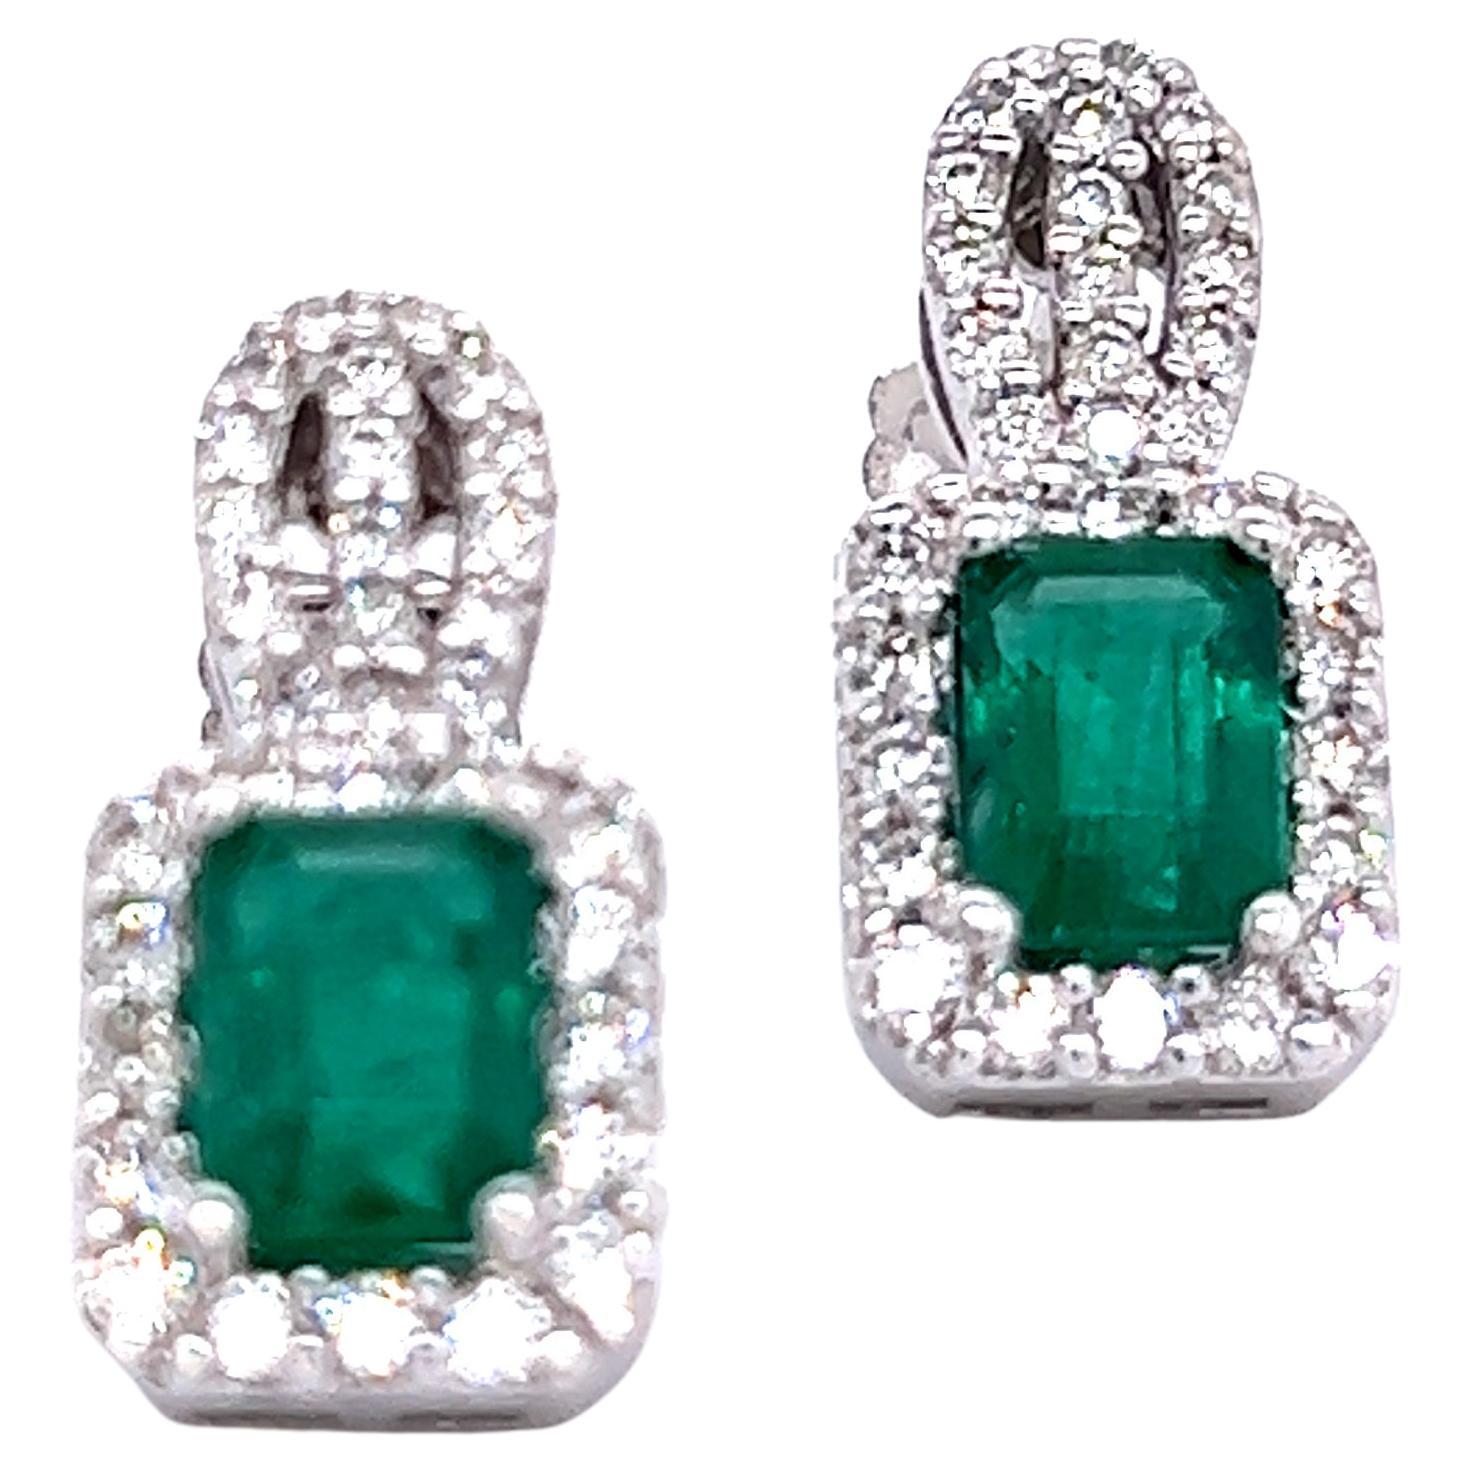 Natural Emerald Diamond Stud Earrings 14k Gold 2.74 TCW Certified